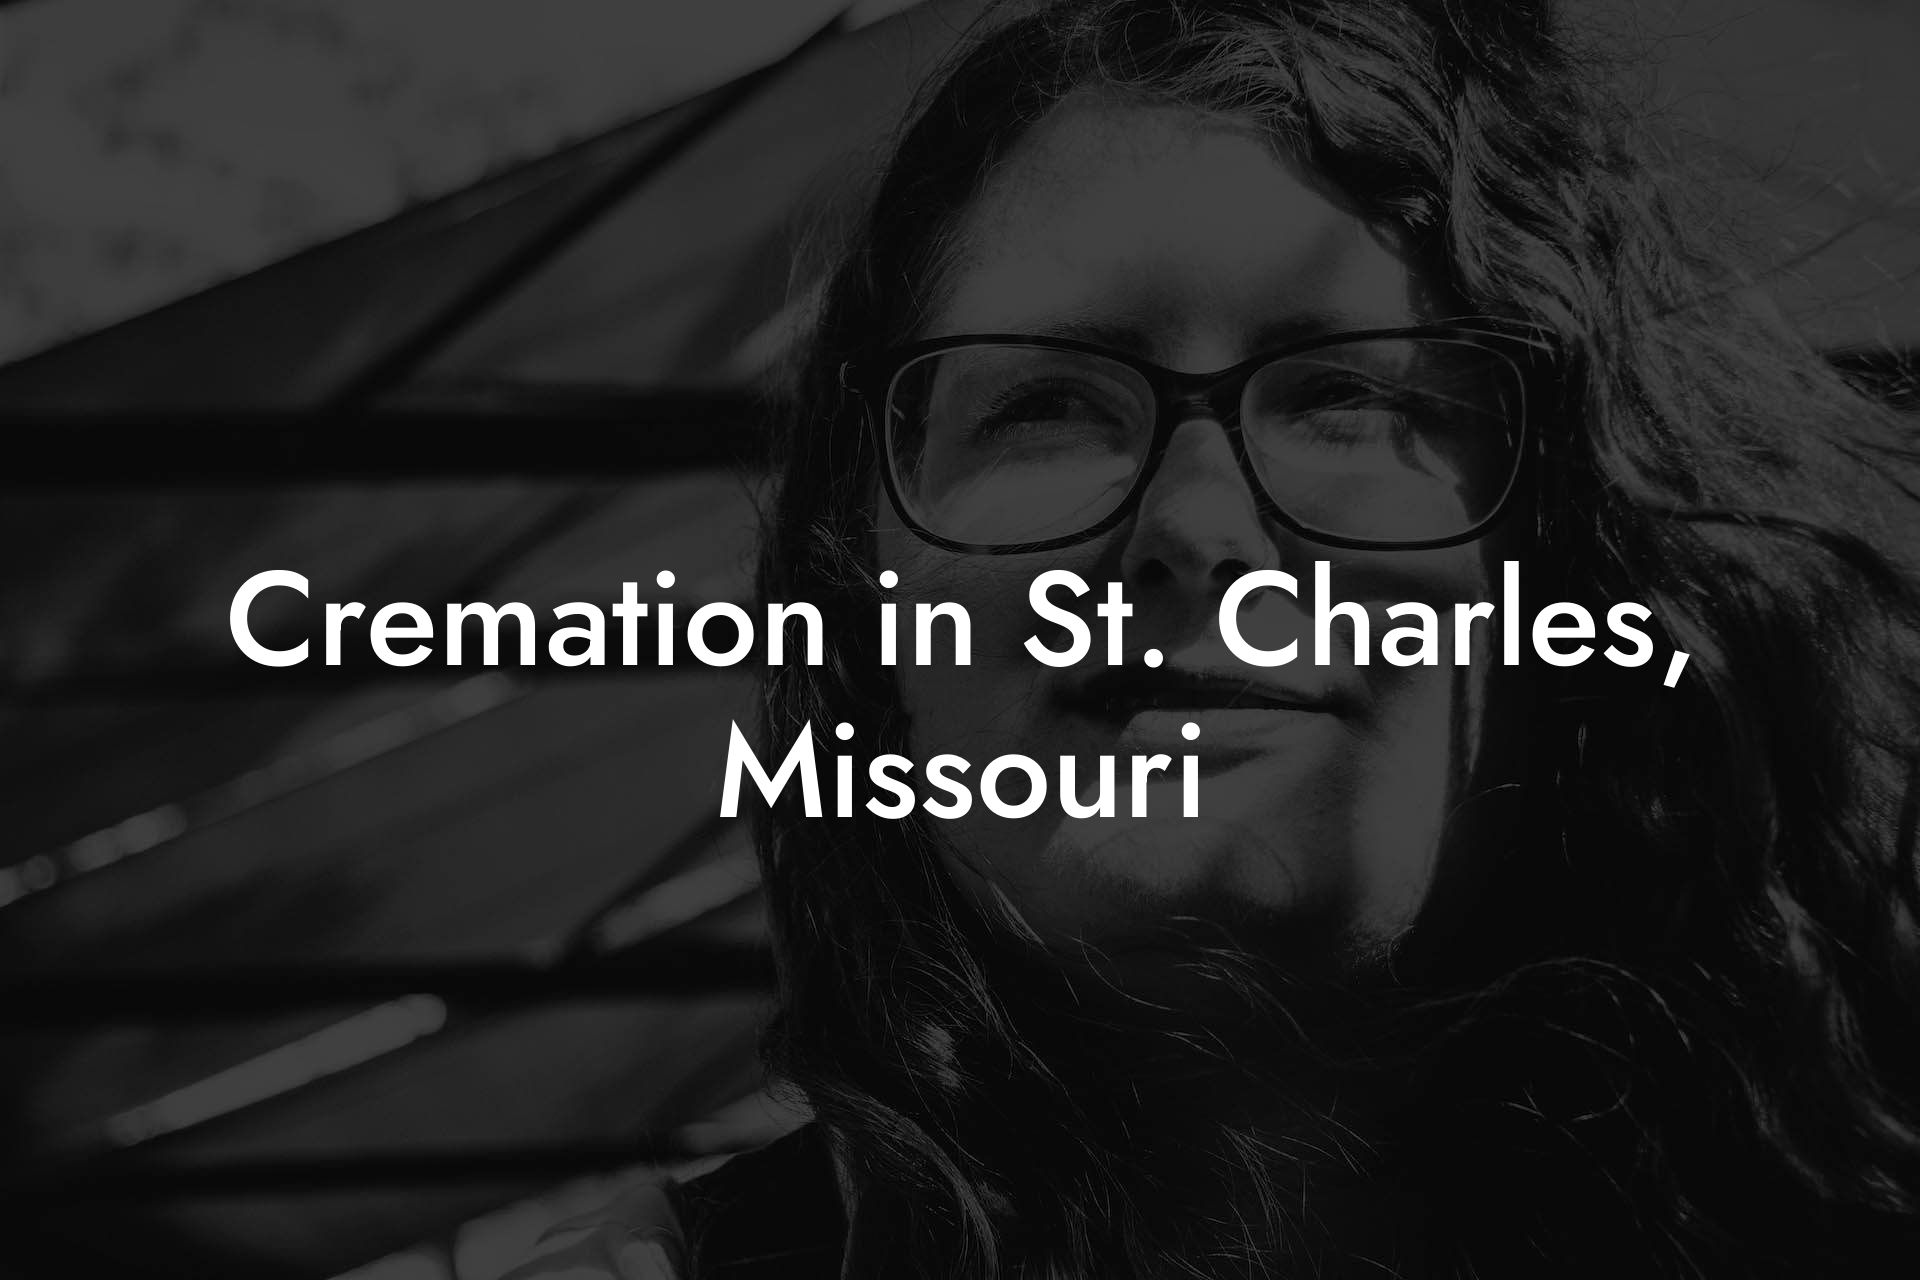 Cremation in St. Charles, Missouri